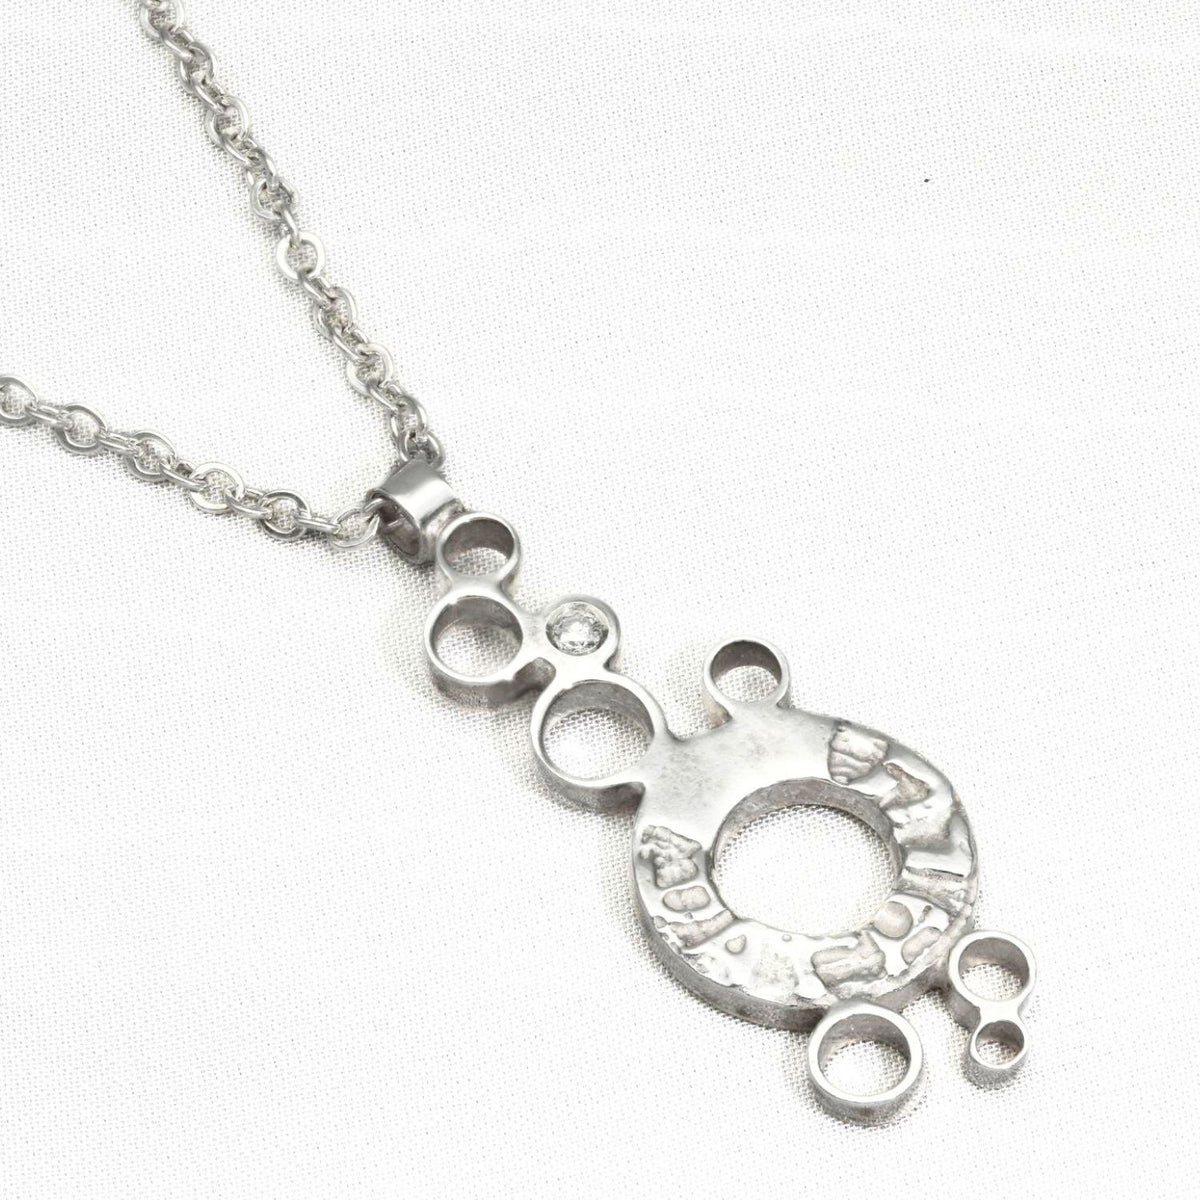 Dathlu / Celebration: Small Silver Pendant with Diamond